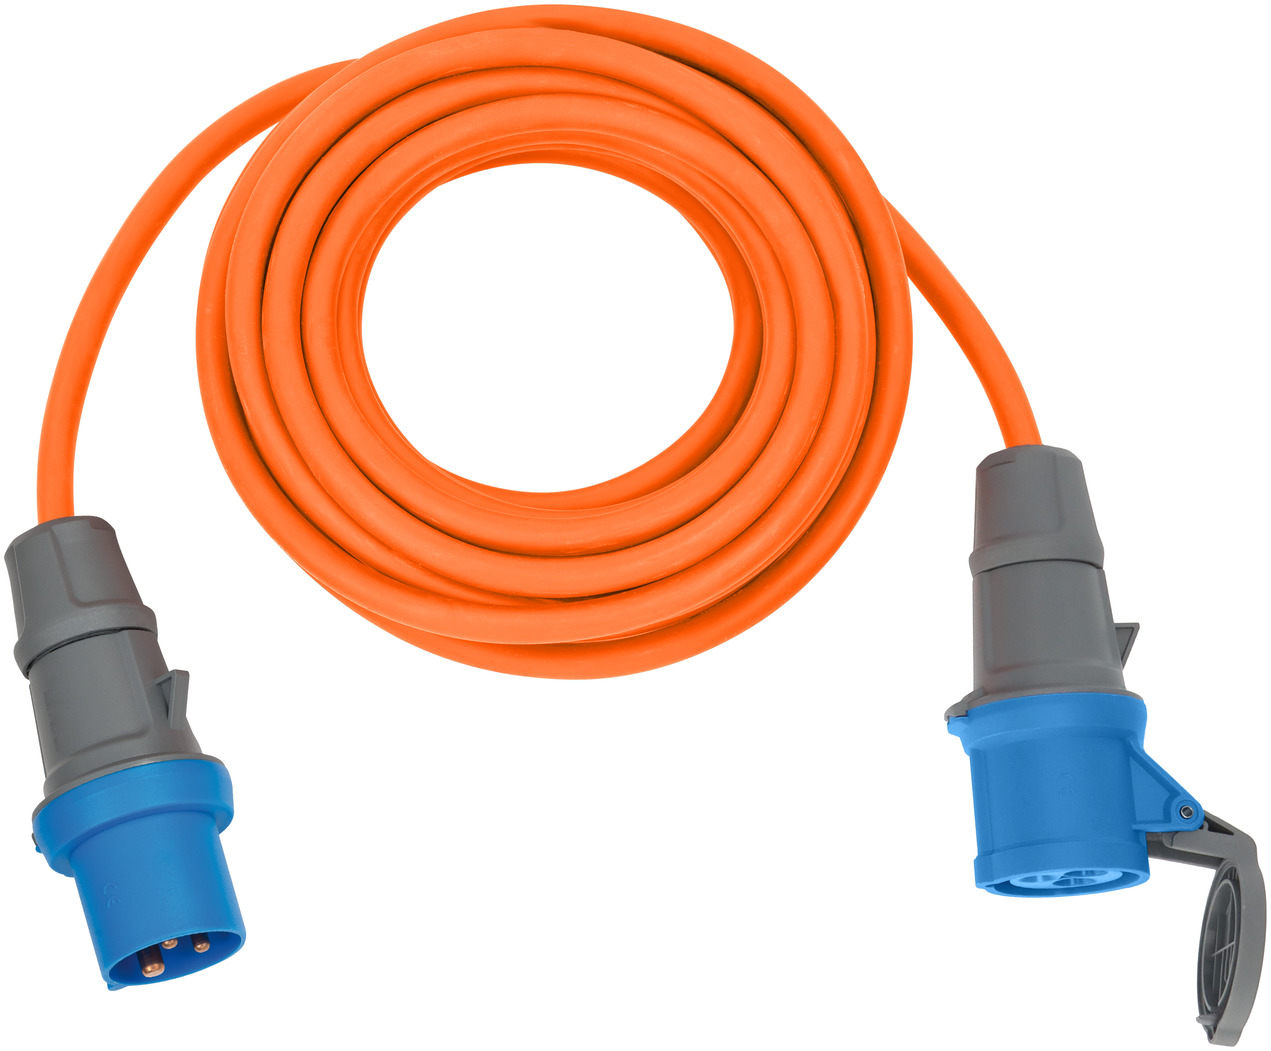 Cable alargador CEE IP44 para camping/marítimo 10m H07RN-F 3G2,5 naranja  CEE 230V/16A enchufe y acoplamiento